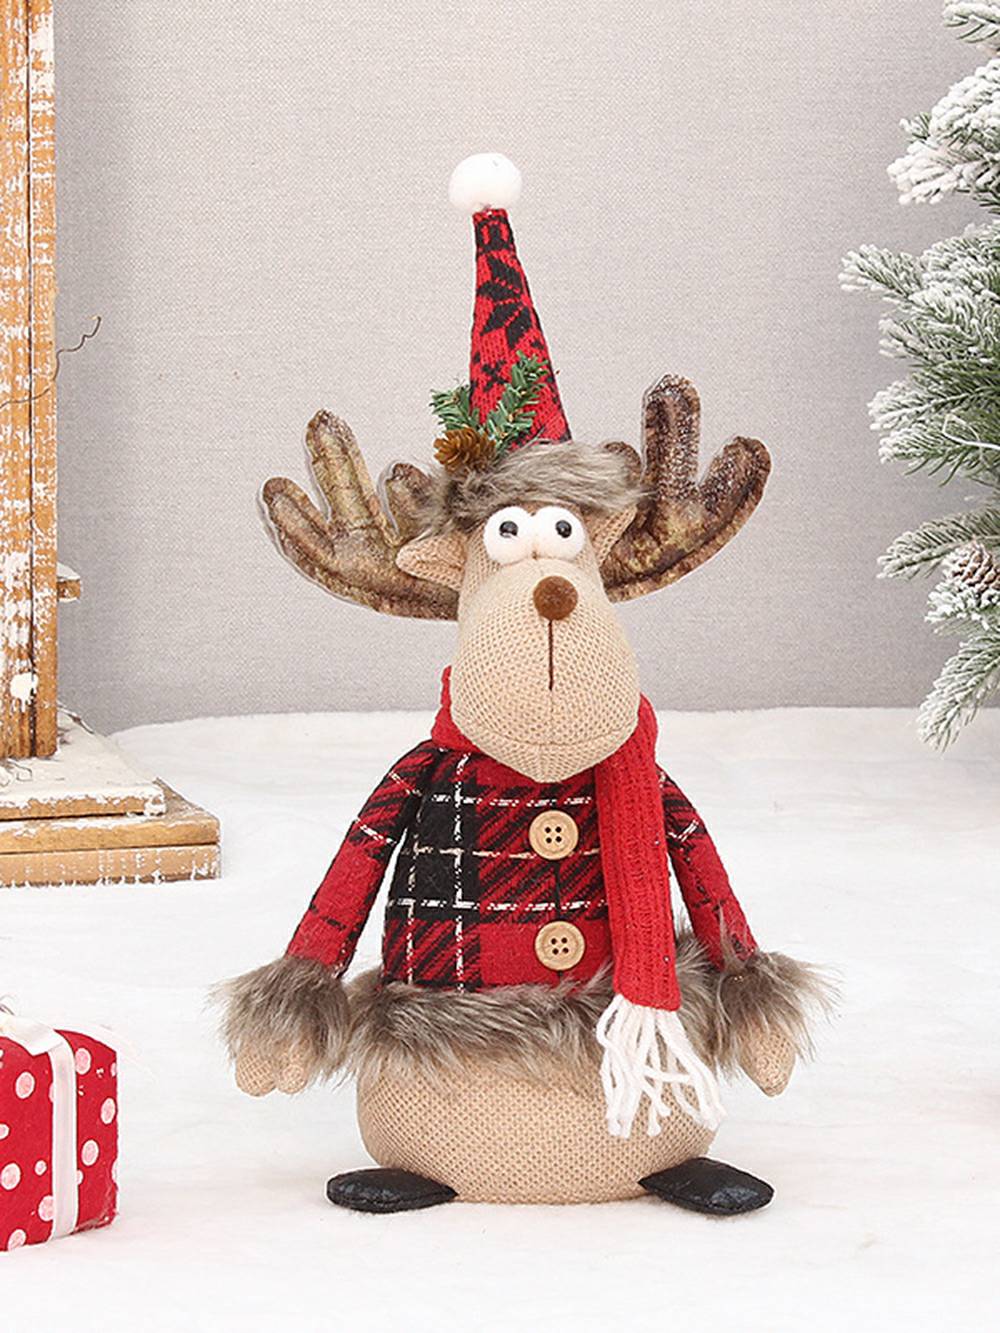 Jul plysj rødt rutete stoff gammel mann snømann elg dukke ornament